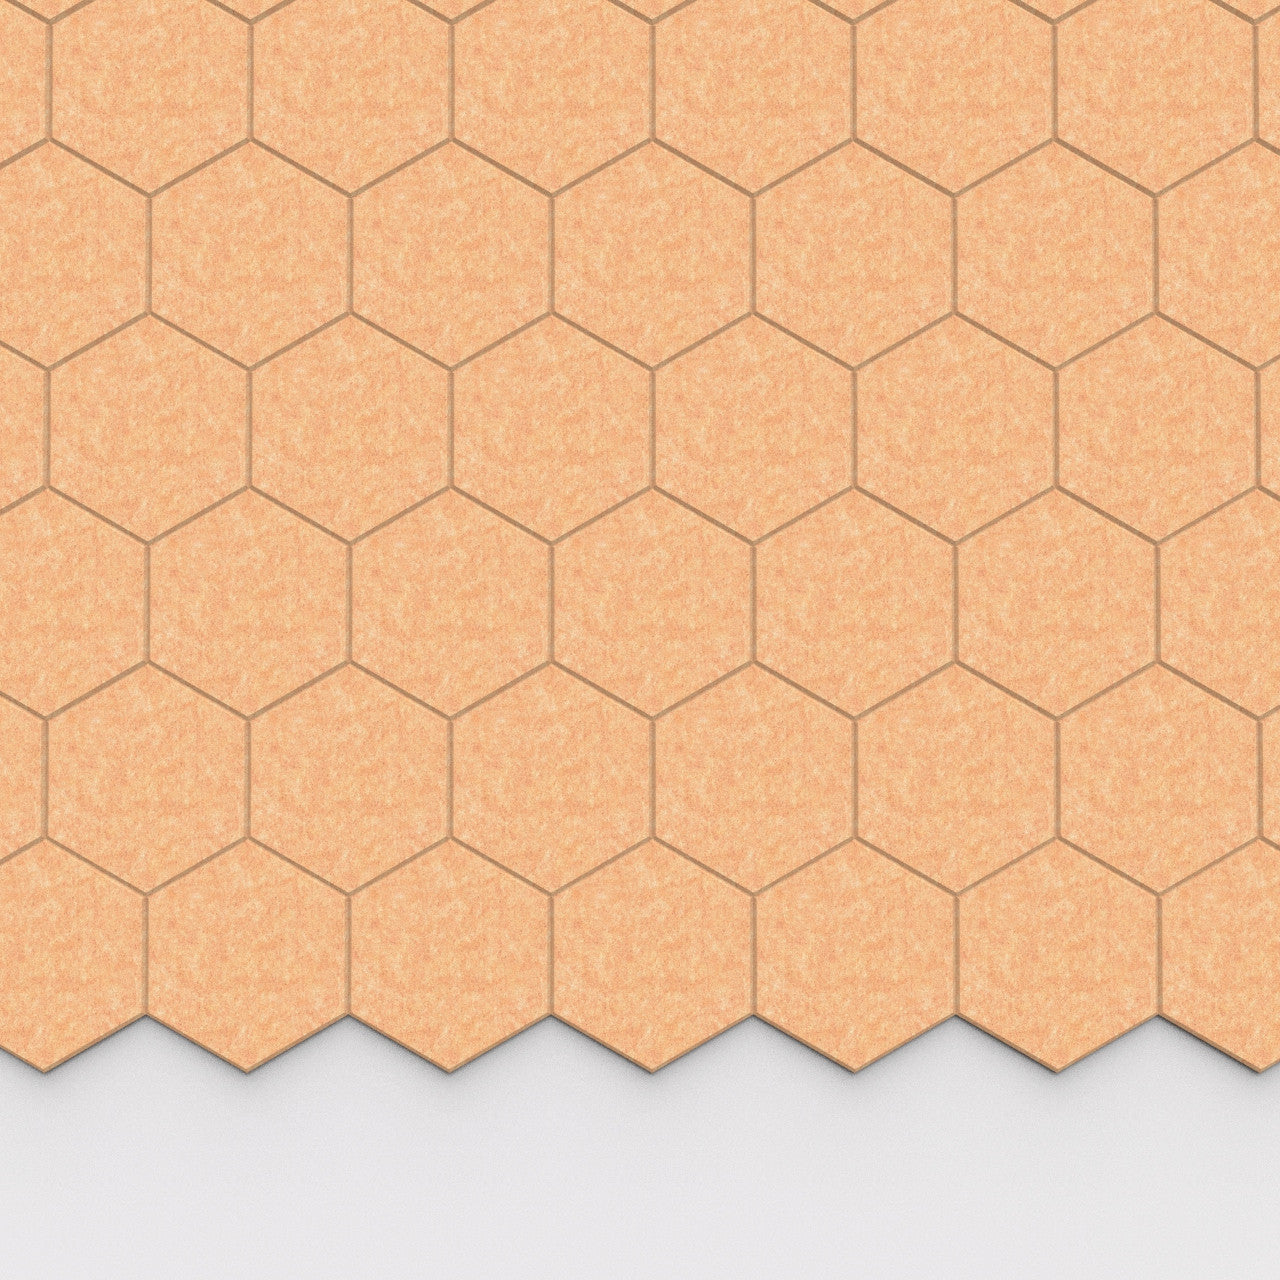 100% Recycled PET Felt Hexagon Plain Small Acoustic Tile Camel | Plastock